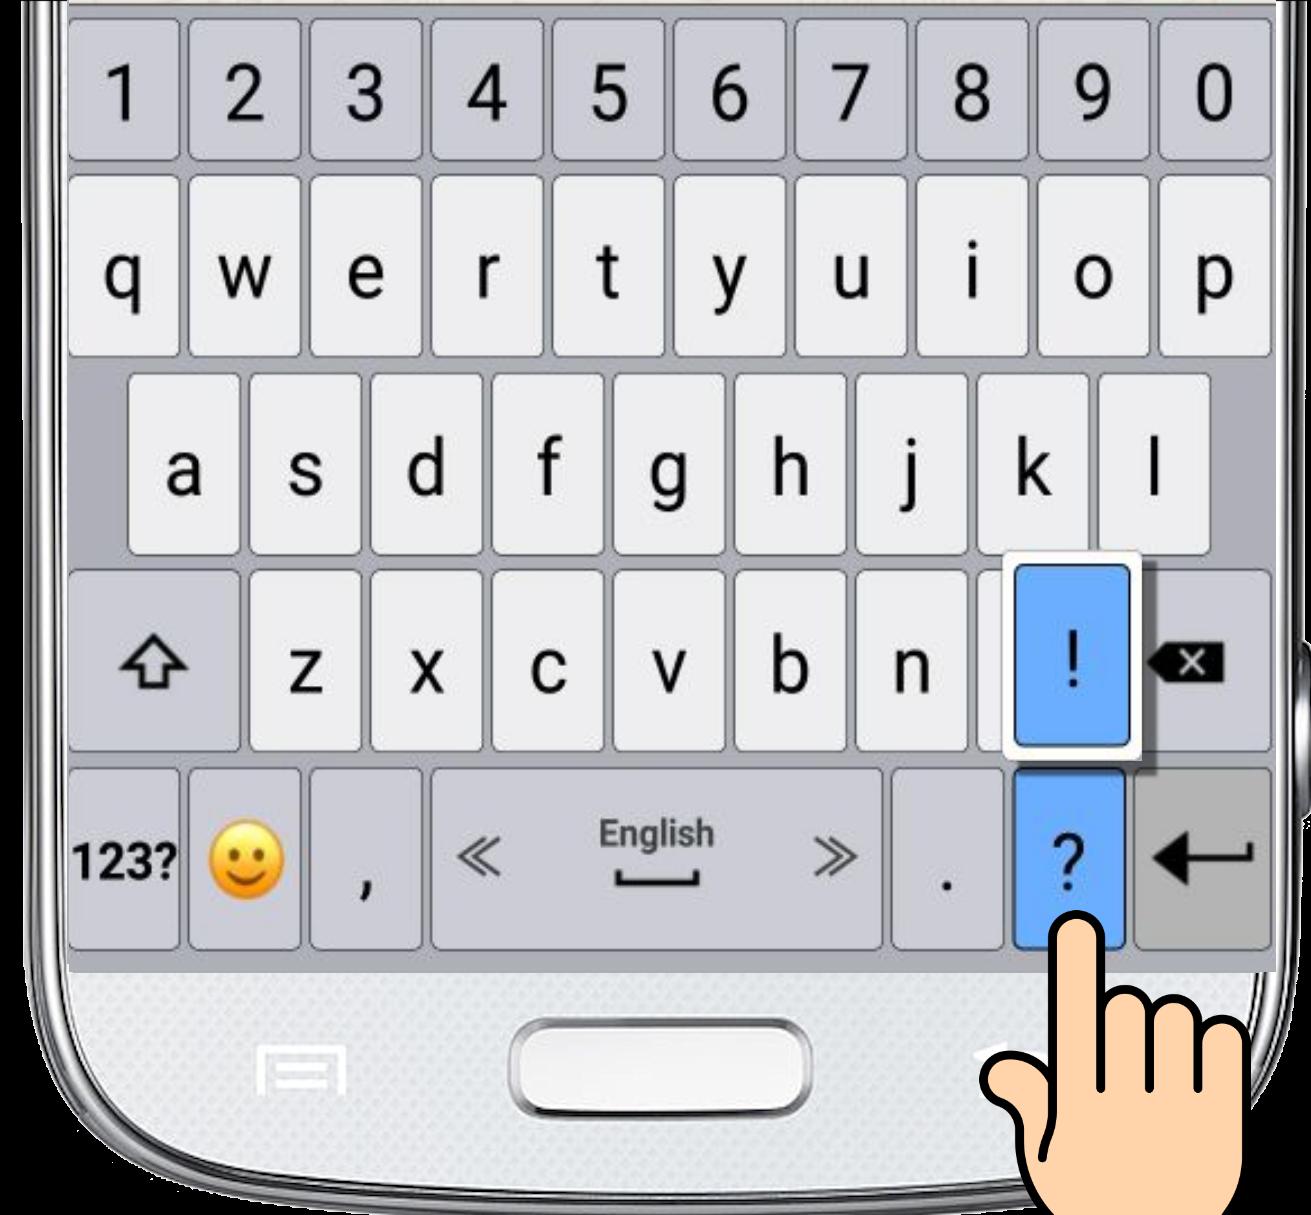 Emoji Keyboard 2020 APK for Android Download